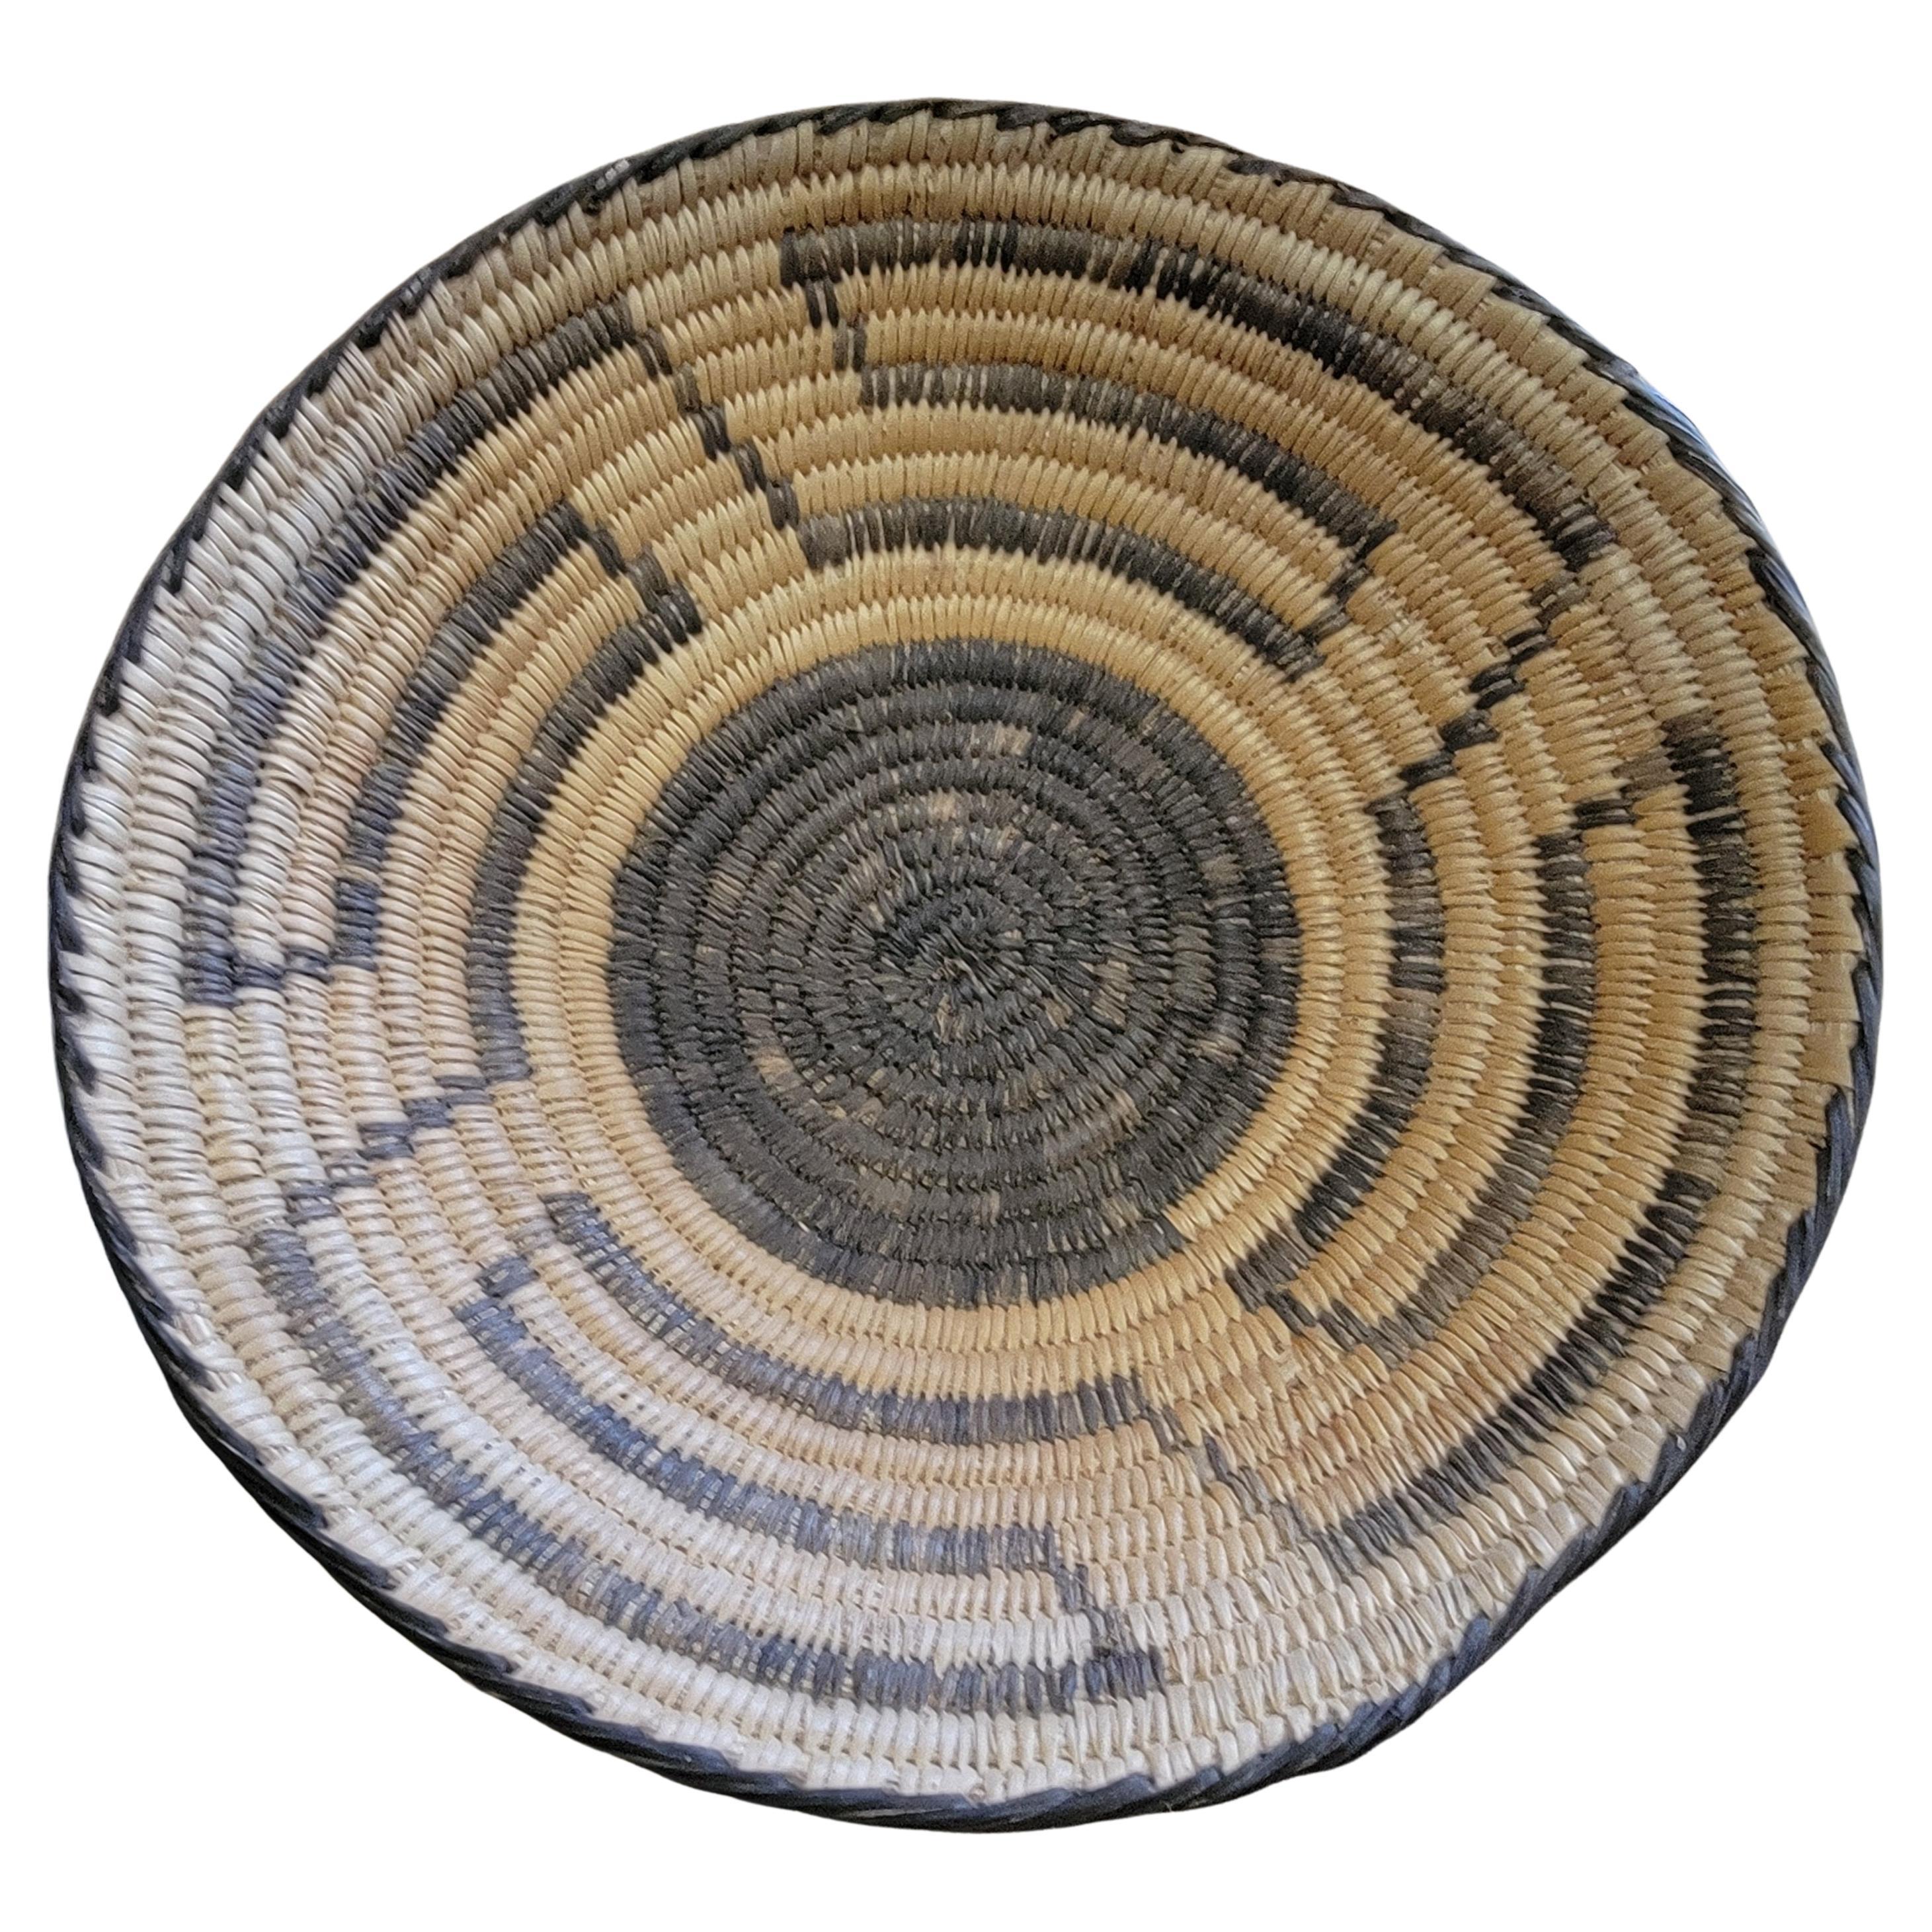 Native American Papago Basket with Geometric Pattern